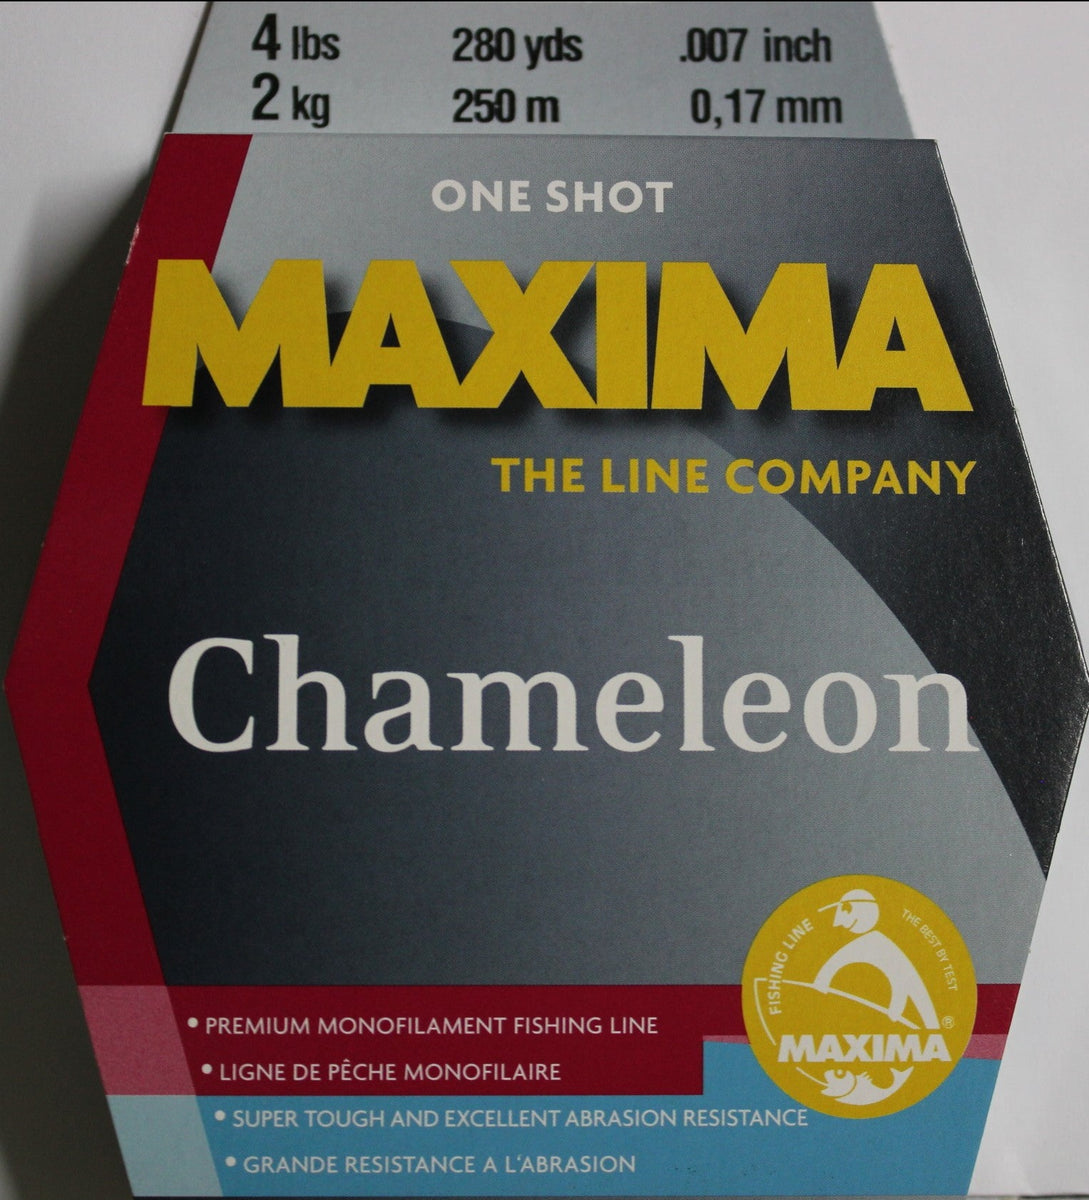 Maxima Chameleon One Shot Fishing Line